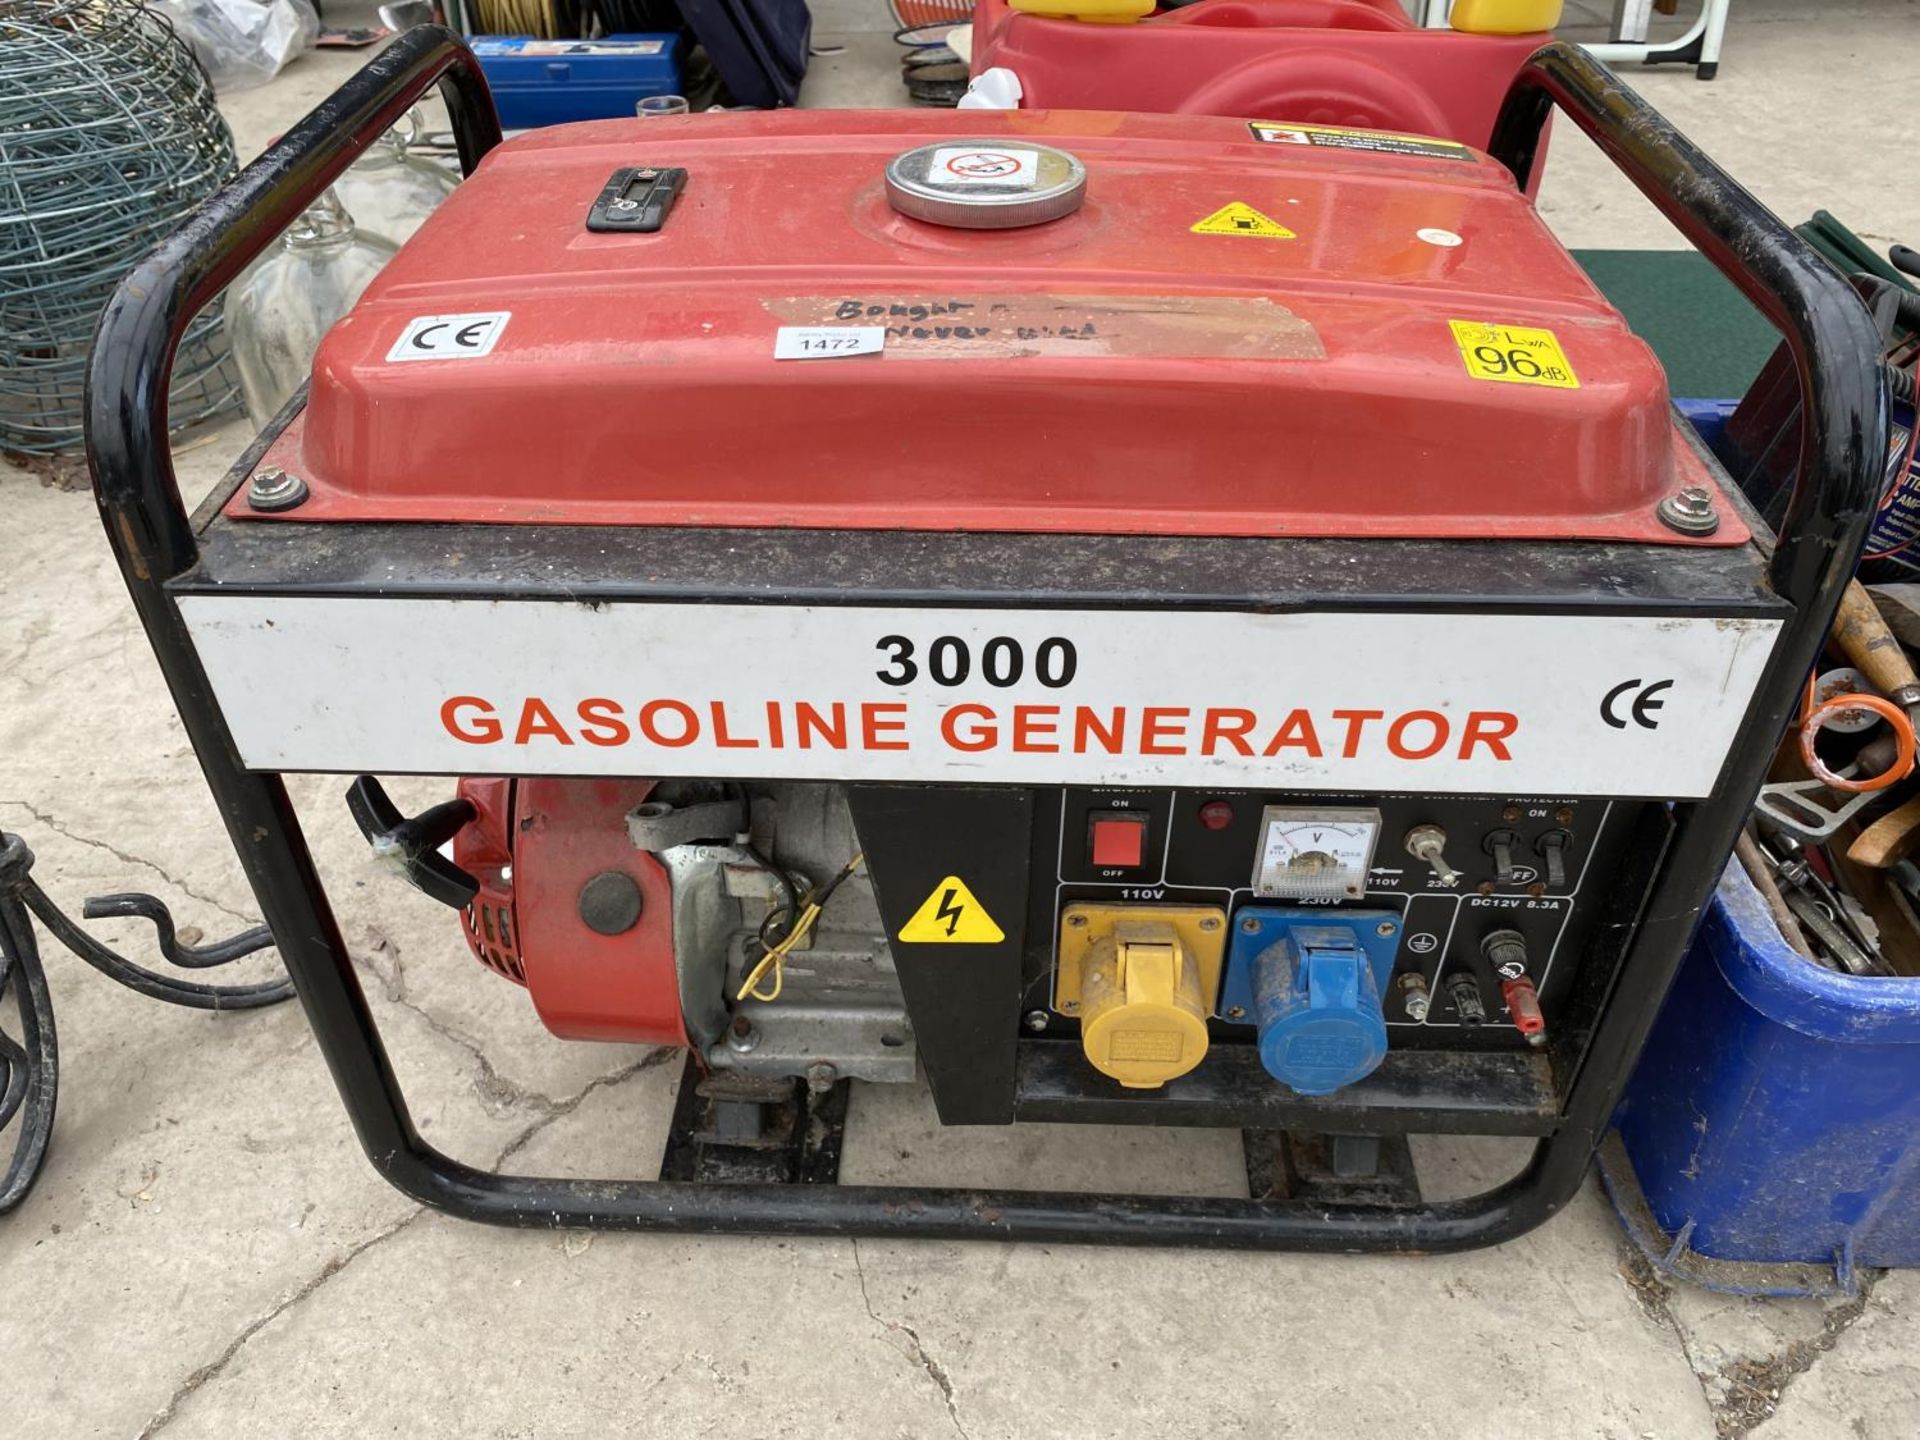 A 3000 GASOLINE GENERATOR